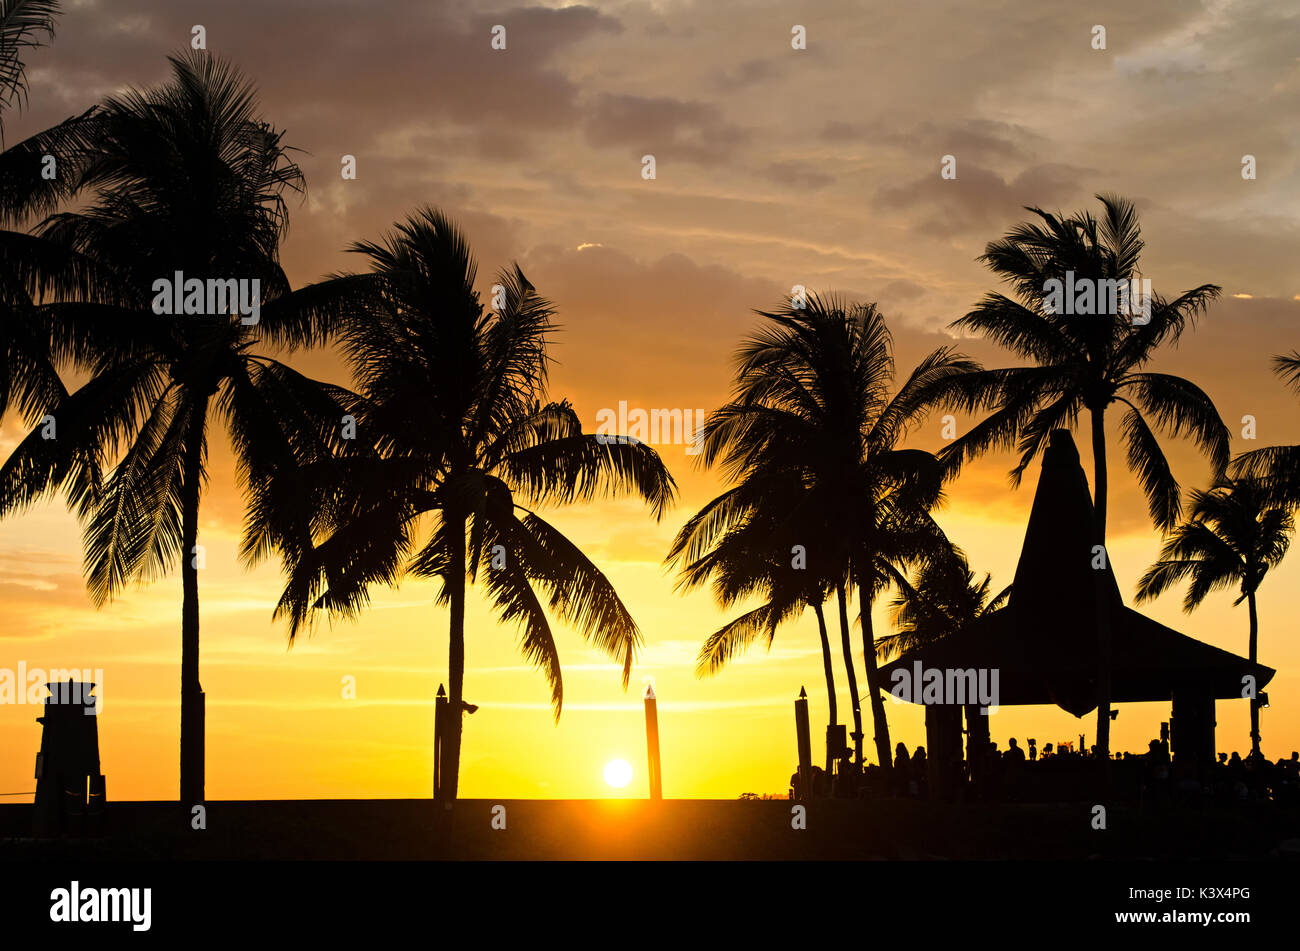 Silhouettes of palm tree during sunset in Kota Kinabalu, Sabah Borneo, Malaysia. Stock Photo